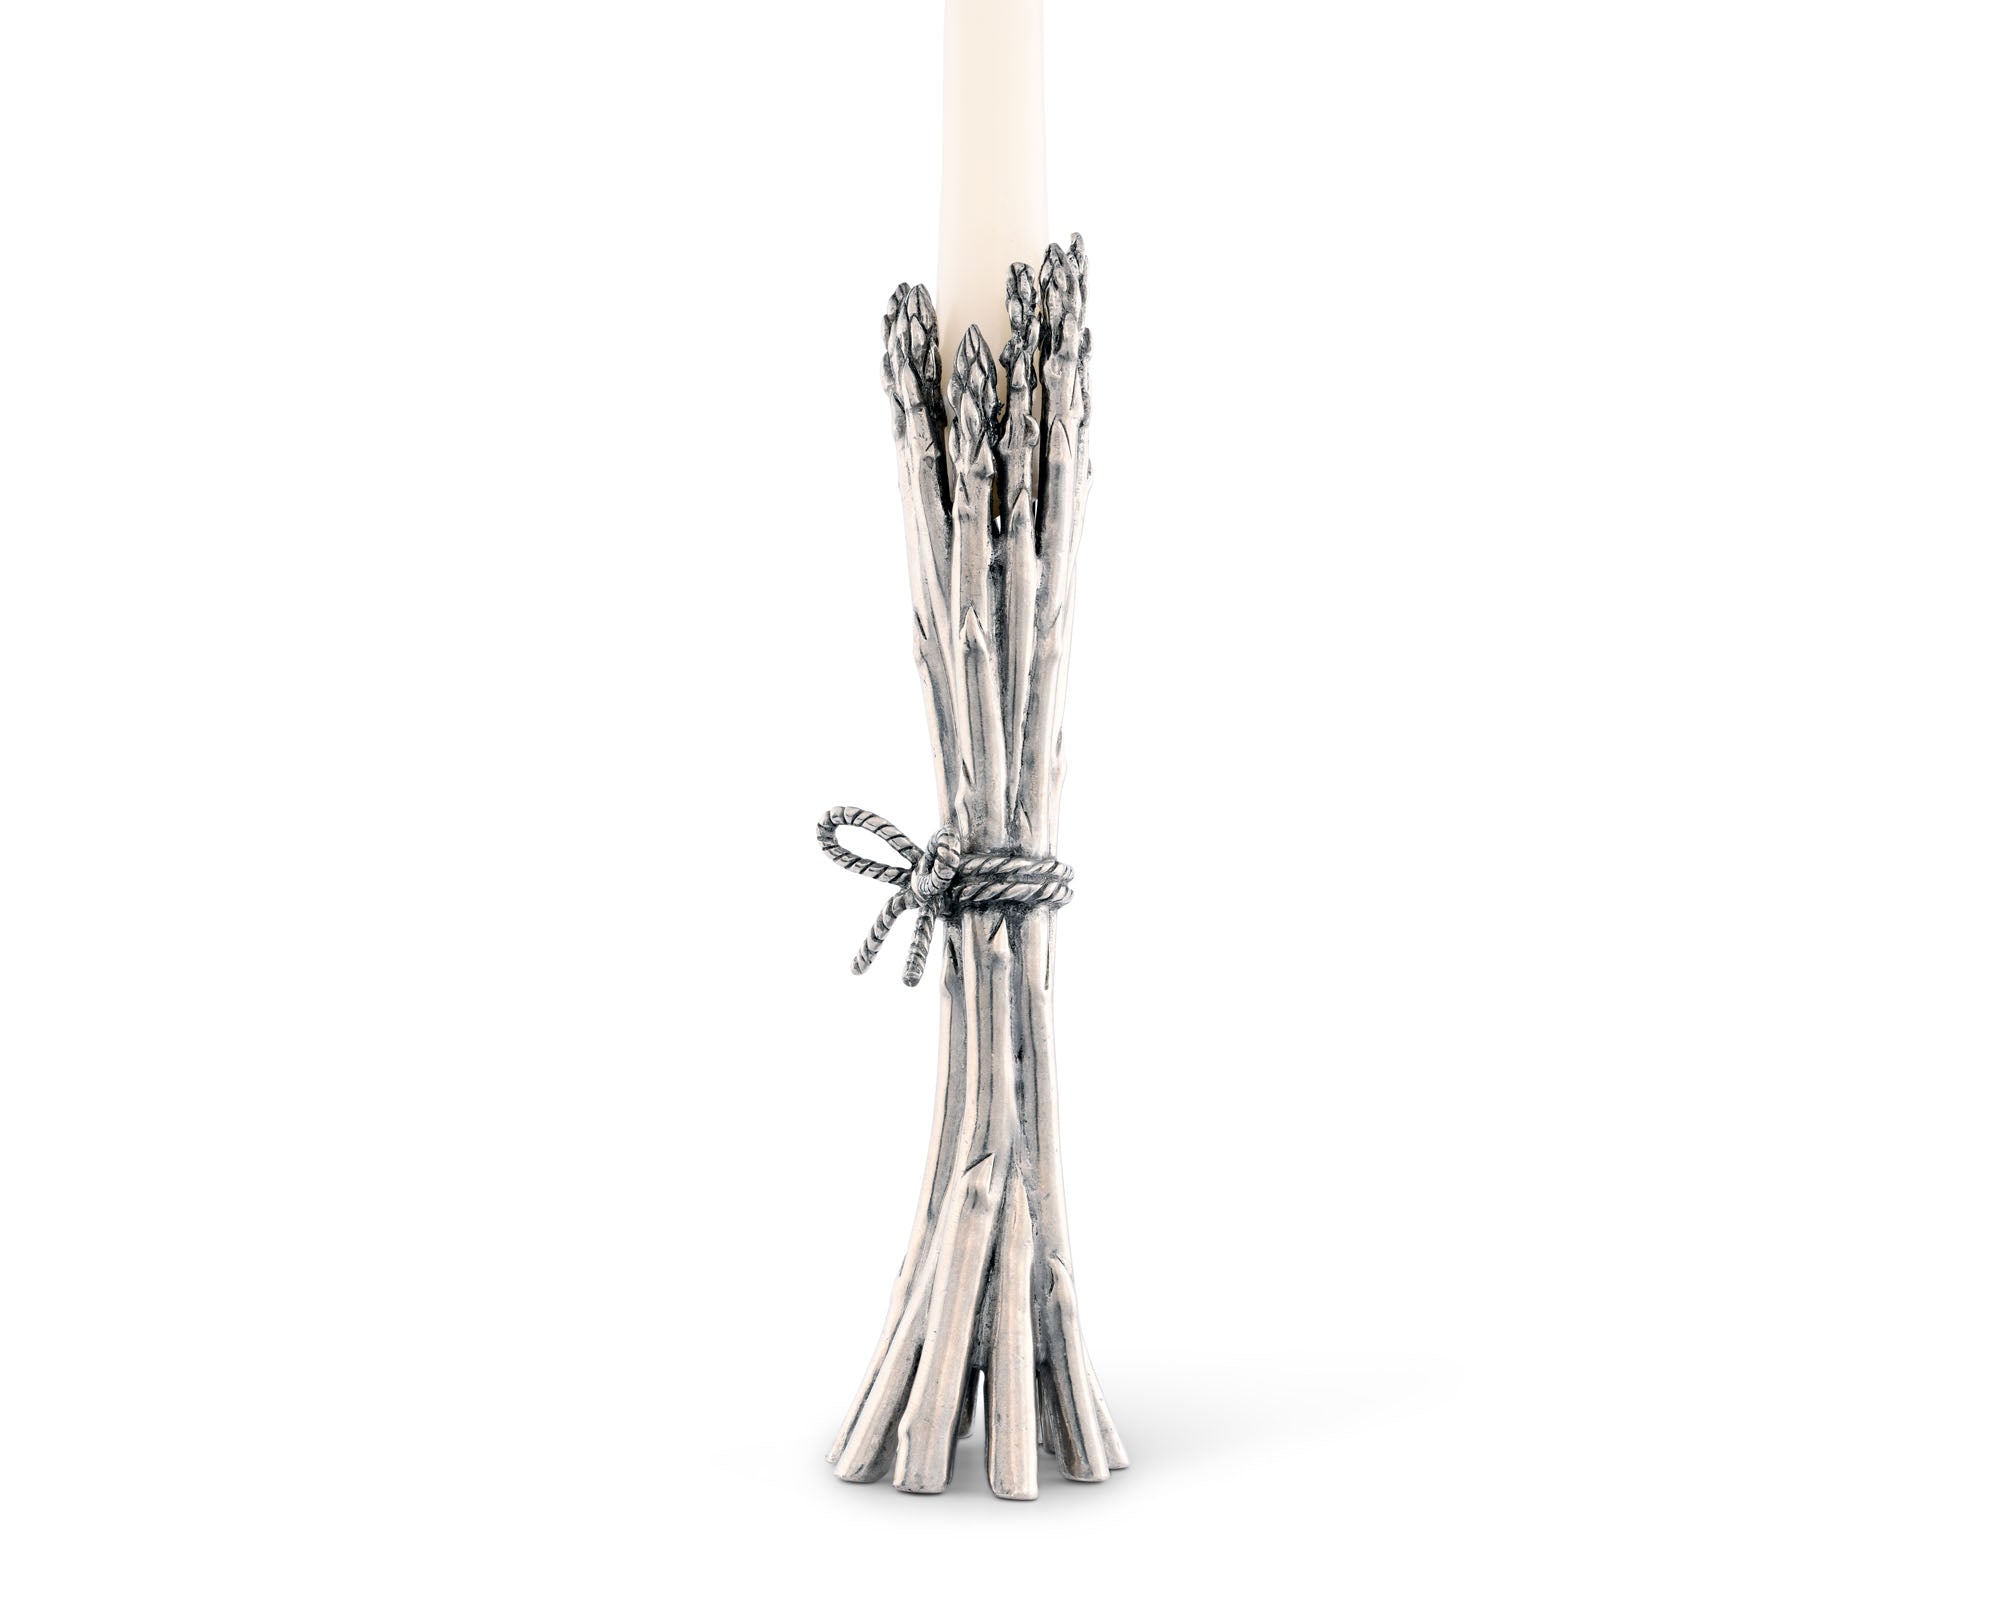 Vagabond House Asparagus Candlestick Product Image